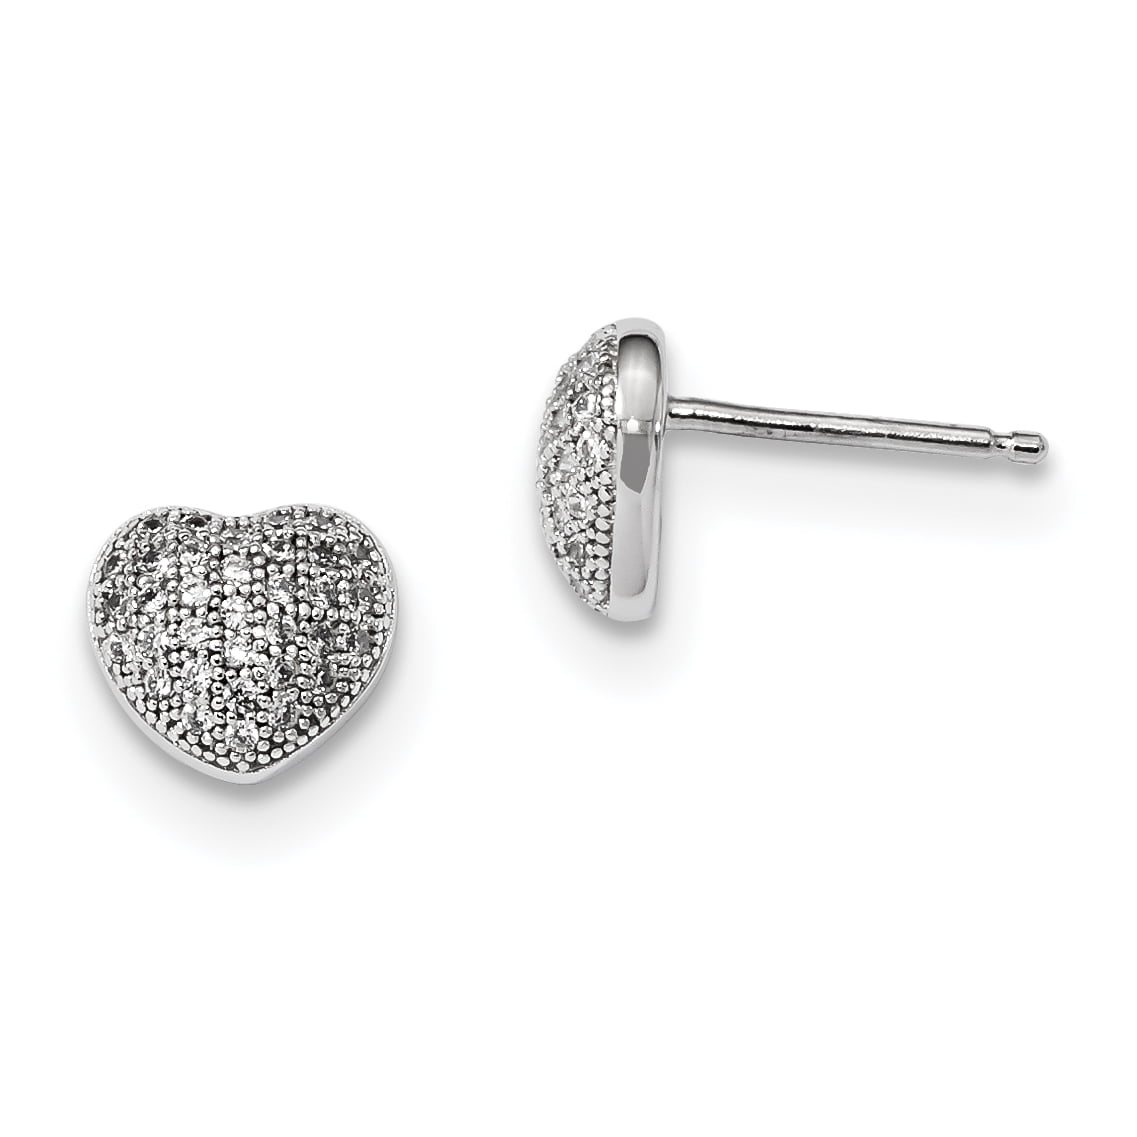 925 Sterling Silver Cubic Zirconia Cz Heart Post Stud Earrings Love Fine Jewelry Gifts For Women For Her 